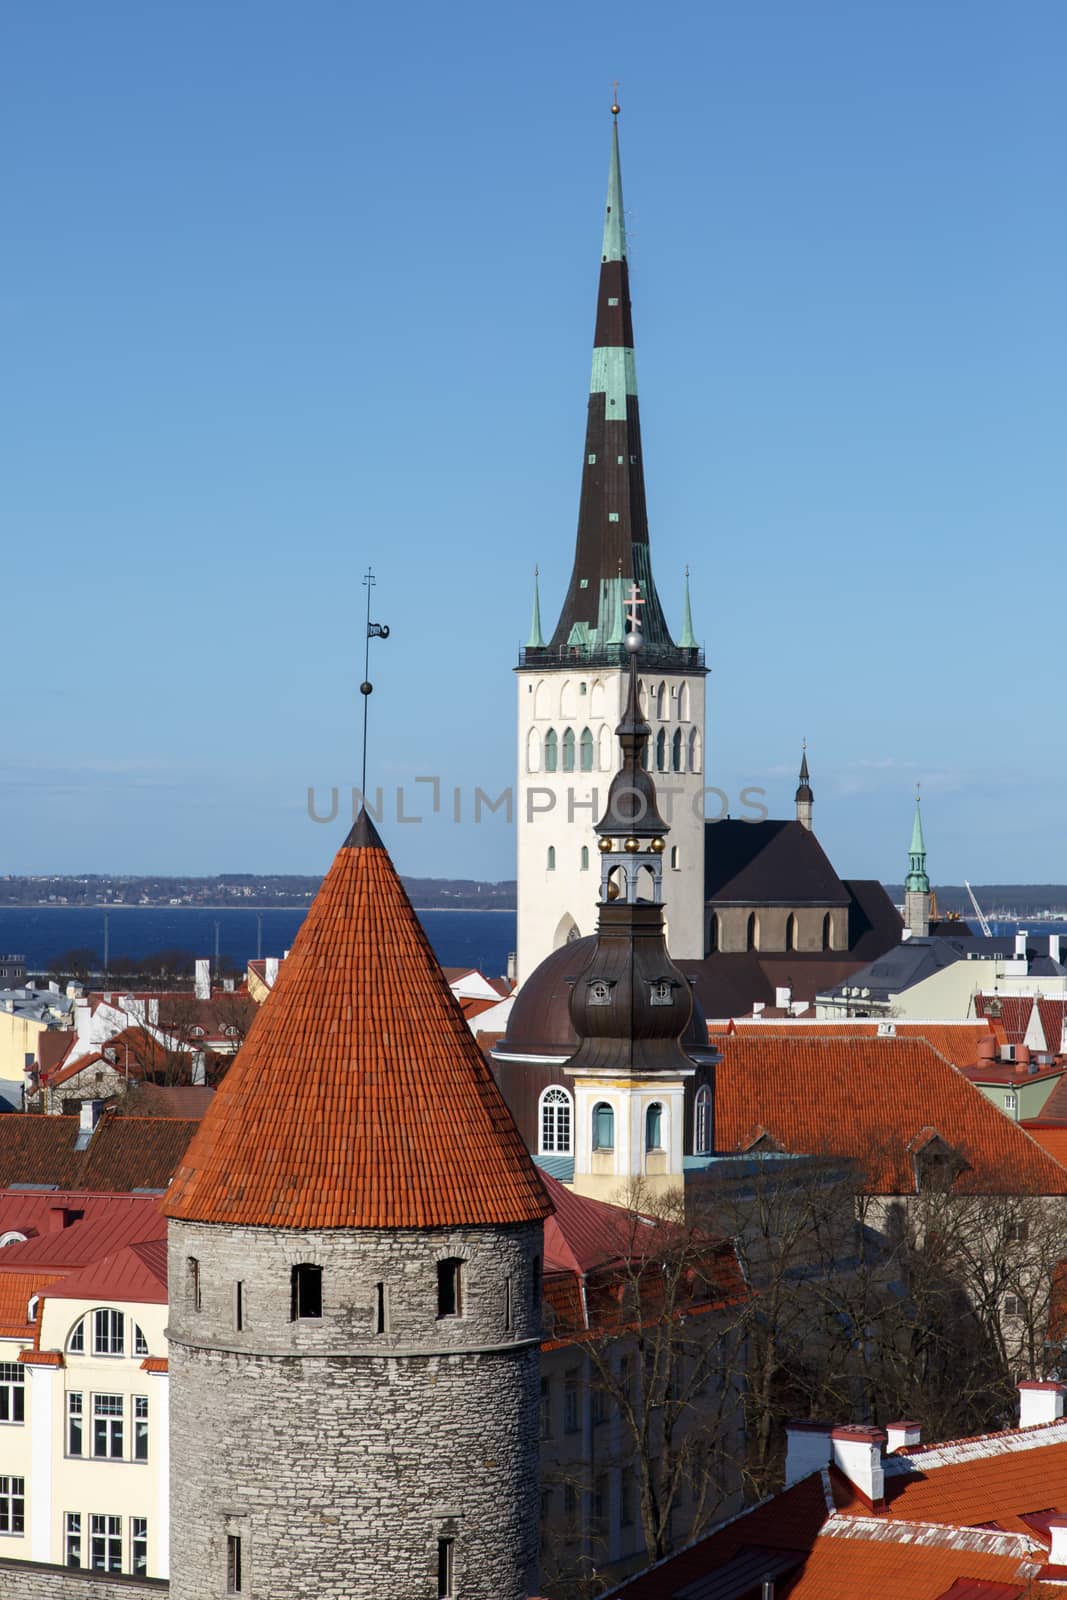 Landscape of Tallinn with Tallinn Walls and St Olaf's Church view, on blue sky background.